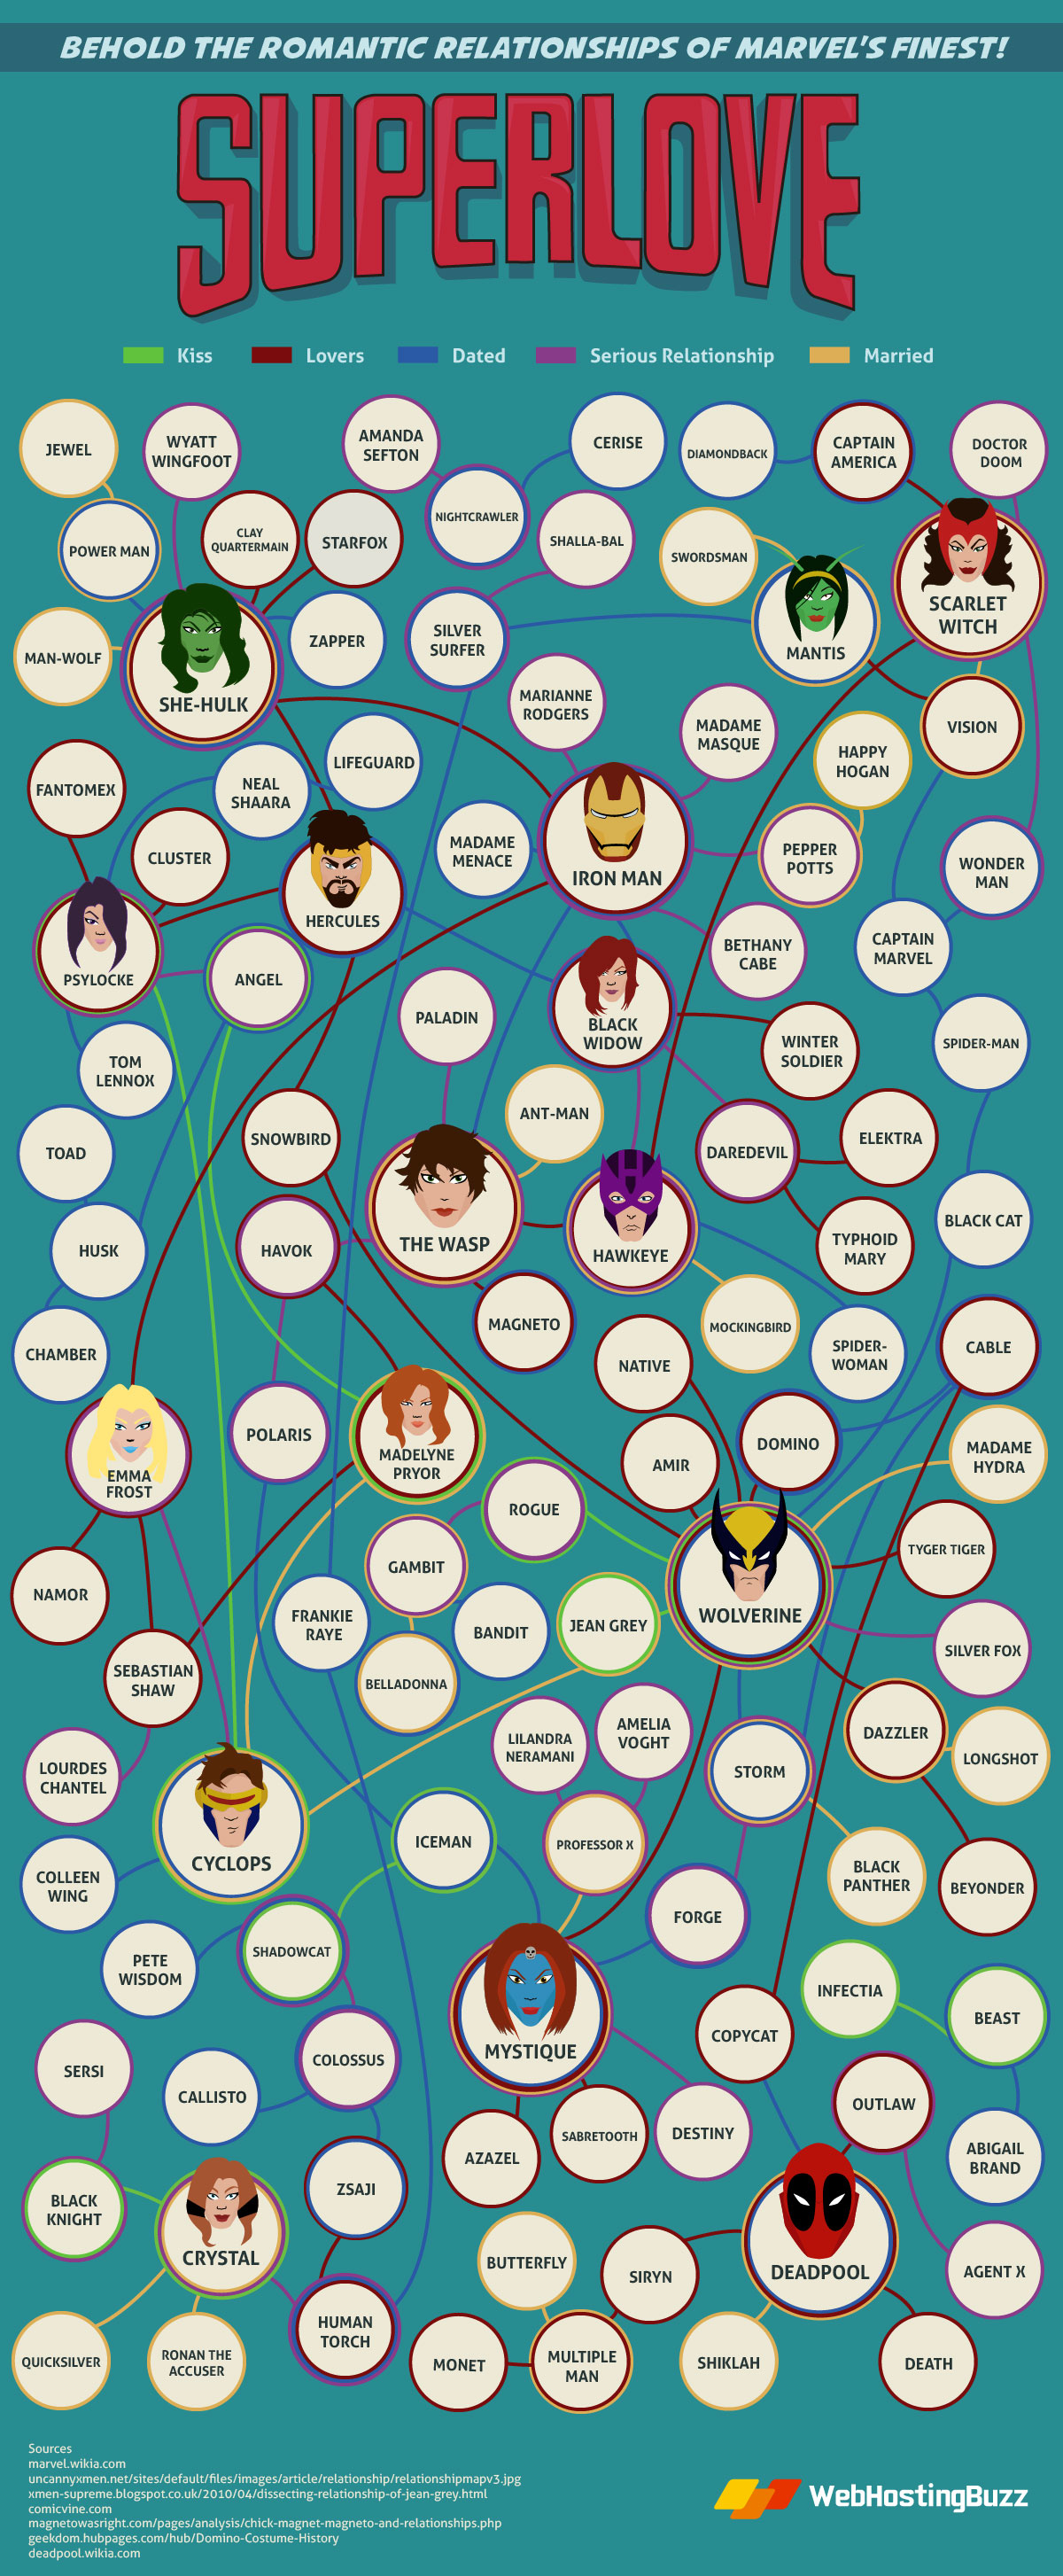 WebHostingBuzz - Marvel Relationship Map